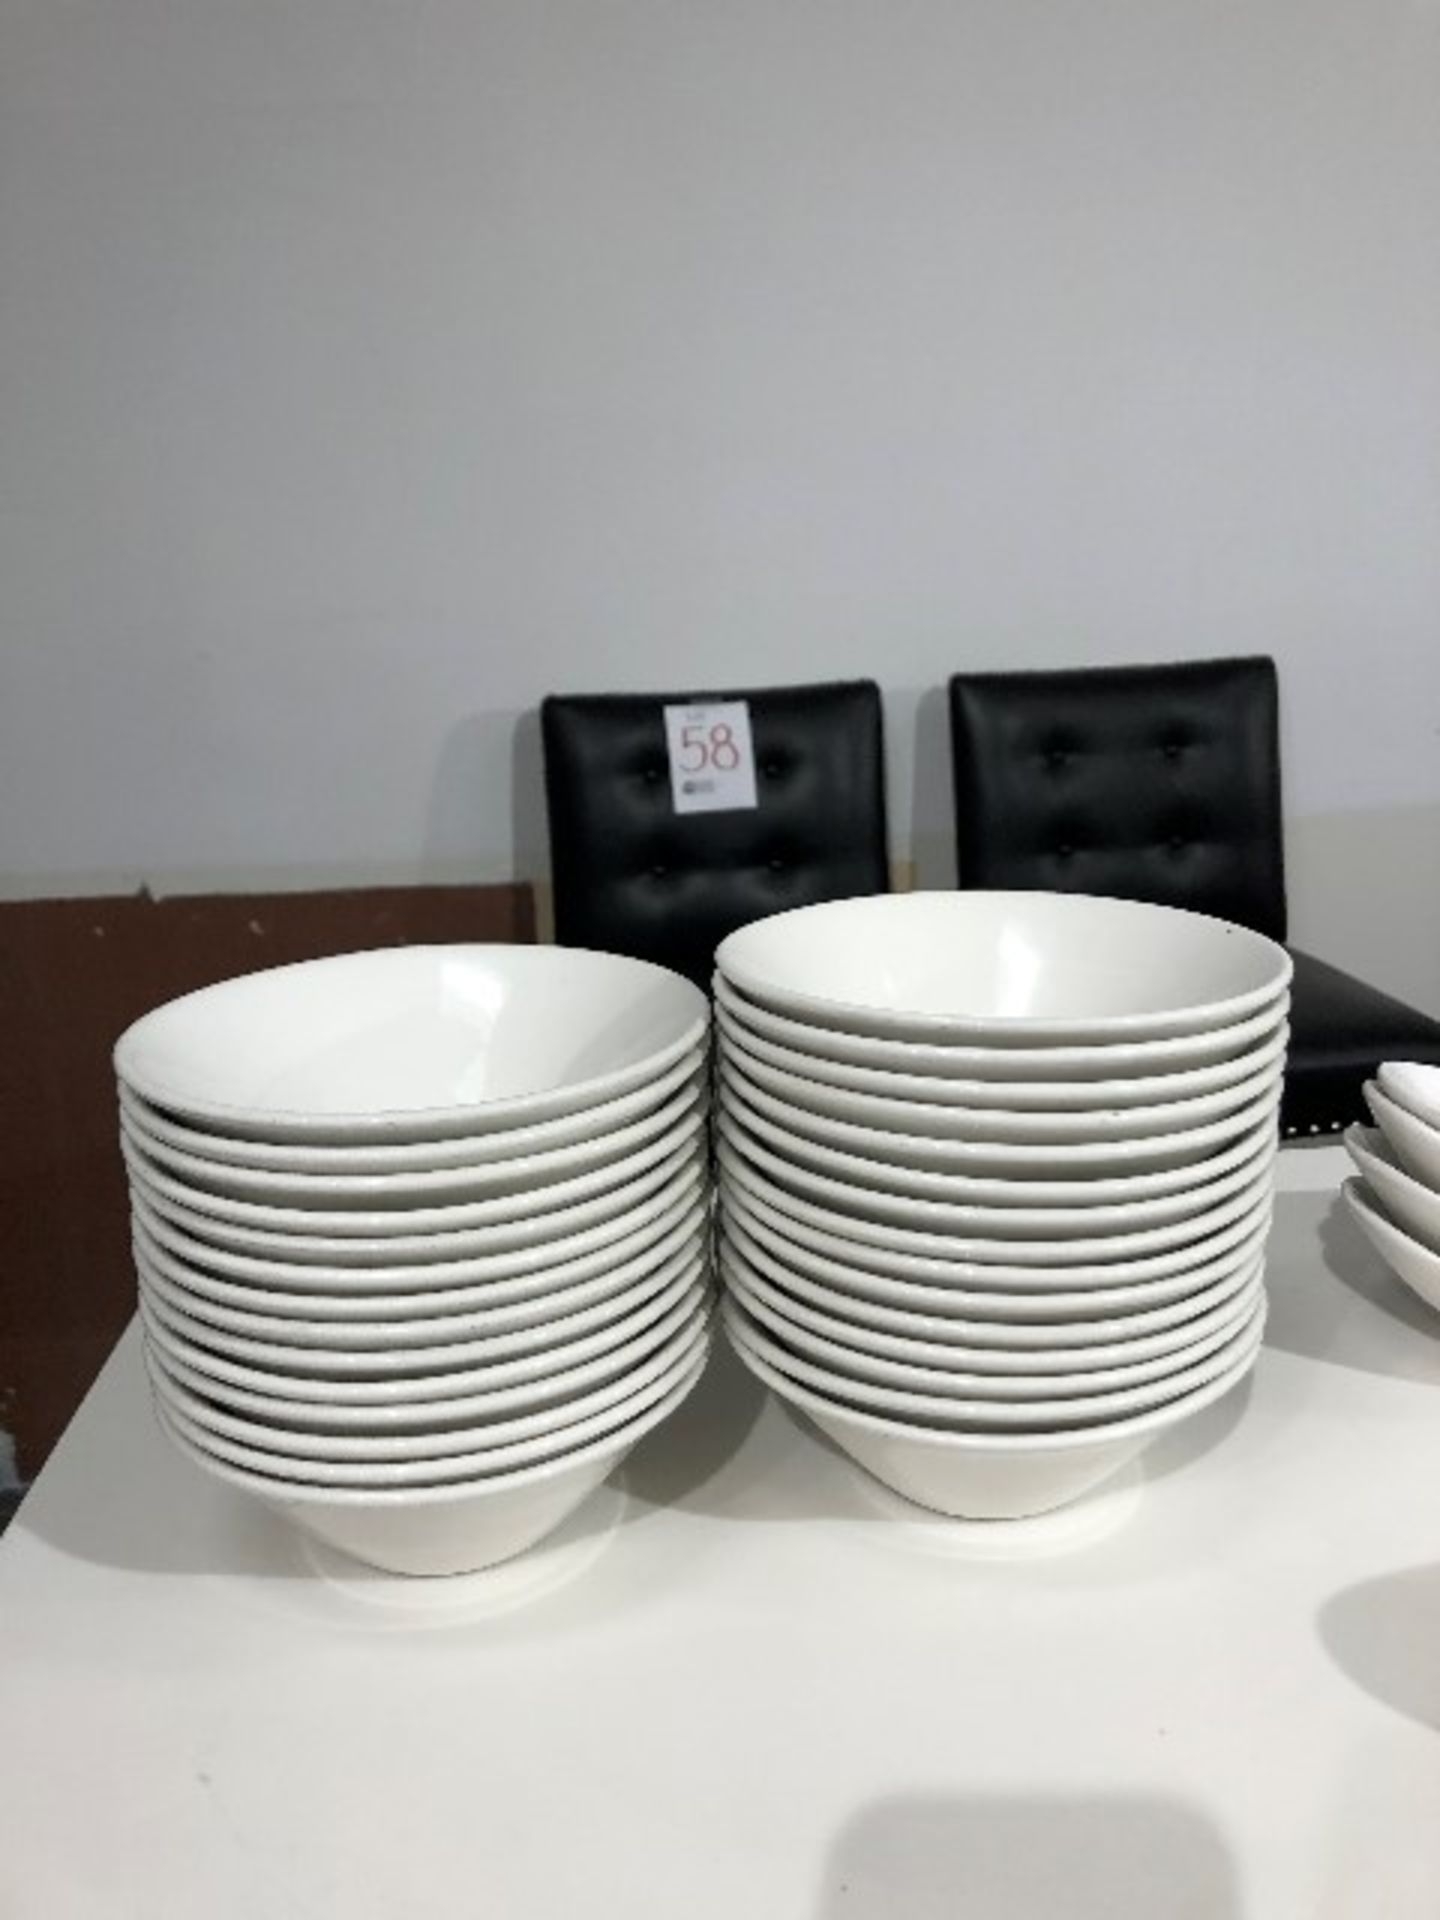 Round bowls, 6.5”, 28 pcs (Lot)